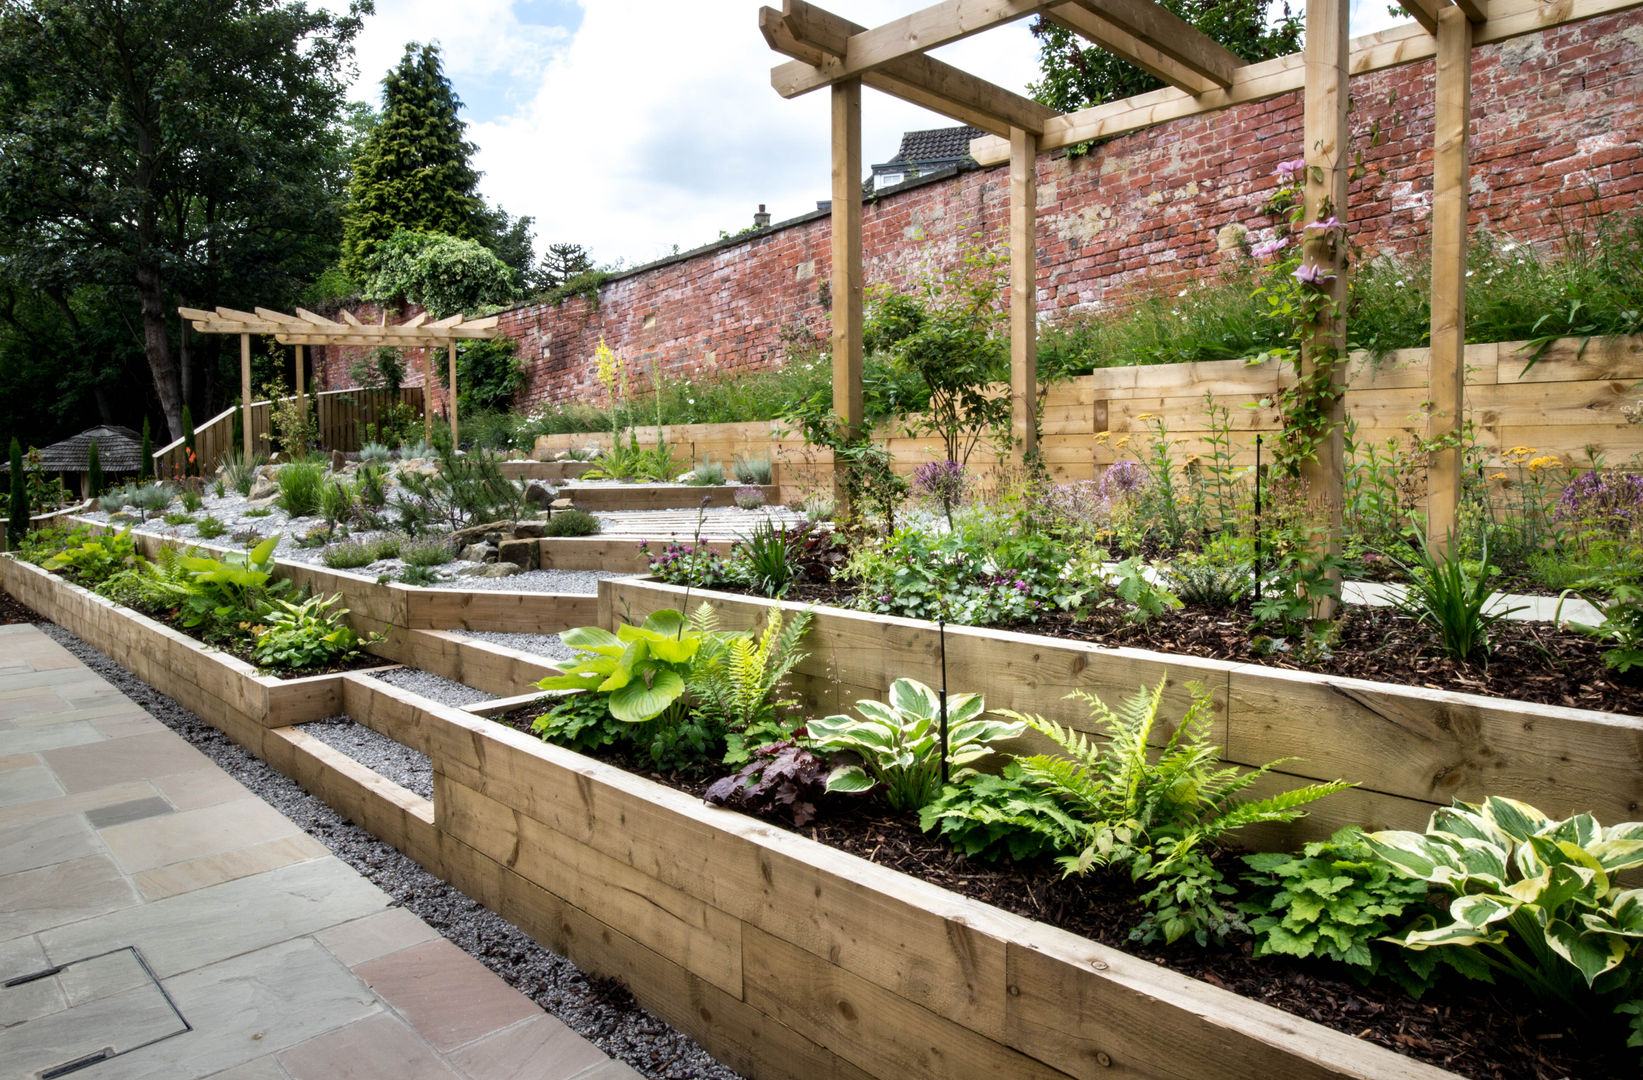 Modern Garden with a rustic twist Yorkshire Gardens Jardines modernos raised beds,railway sleepers,sleepers,pergola